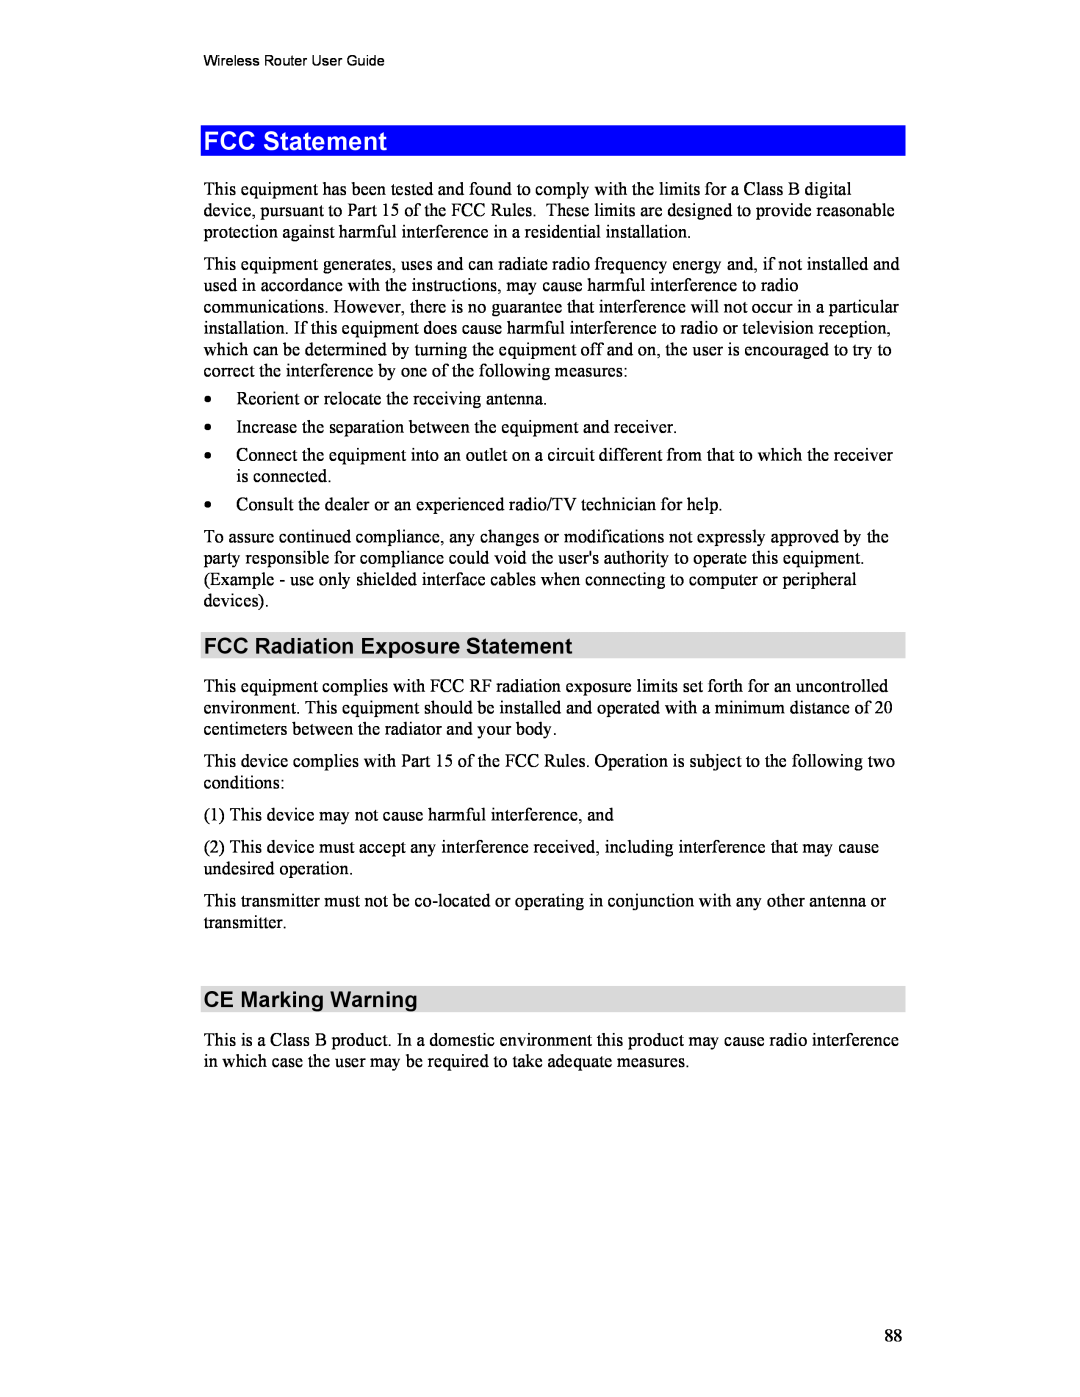 Hawking Technology HWR54G manual FCC Statement, FCC Radiation Exposure Statement, CE Marking Warning 